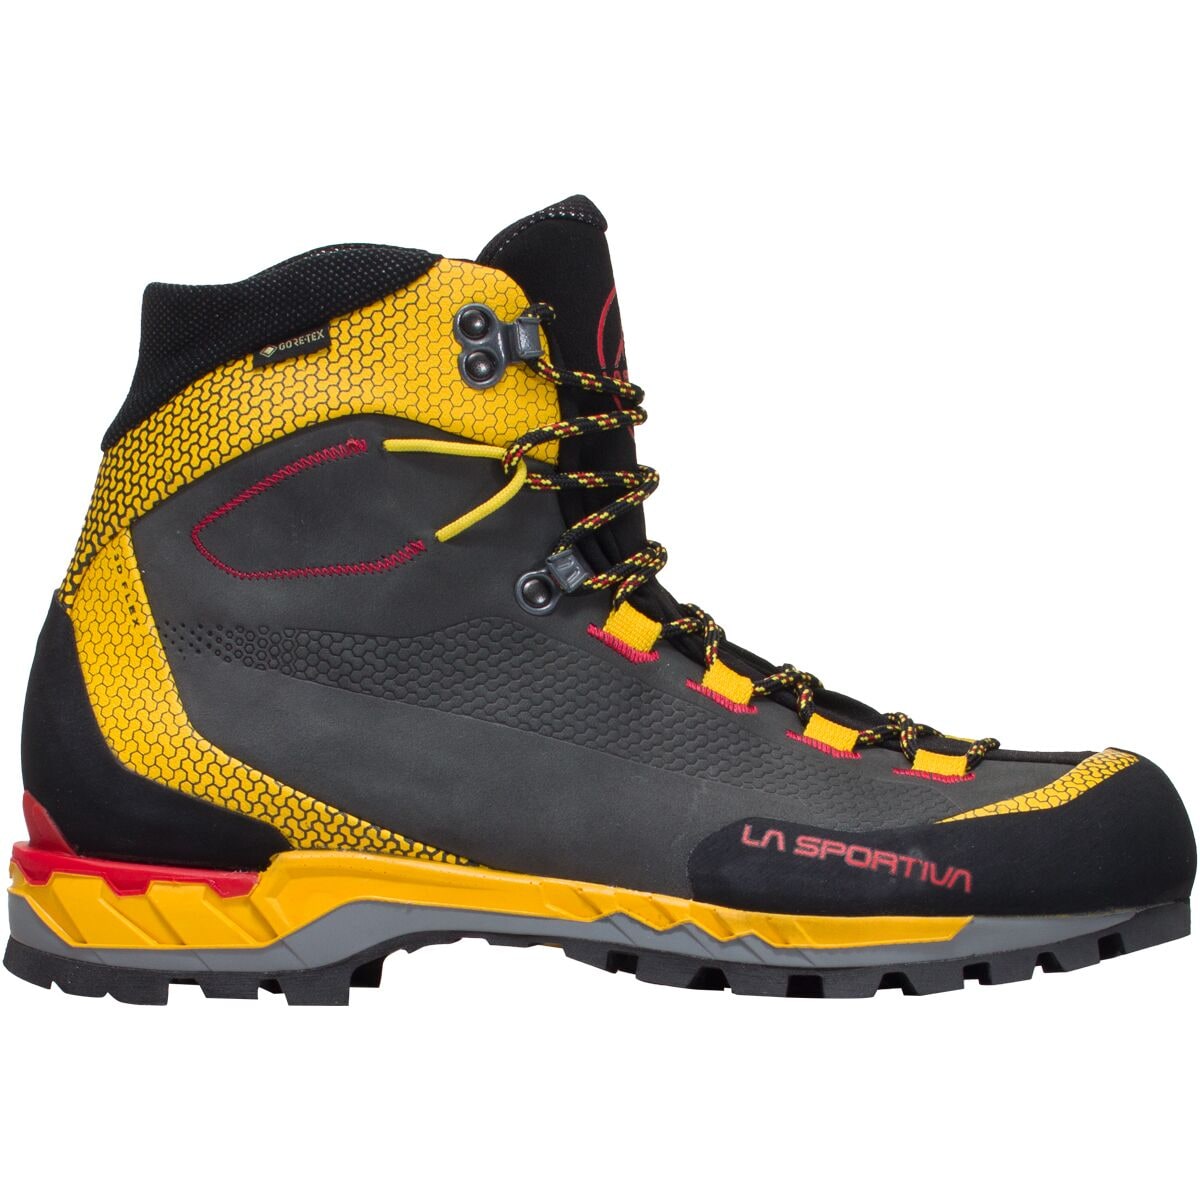 Trango Tech Leather GTX Mountaineering Boot - Men